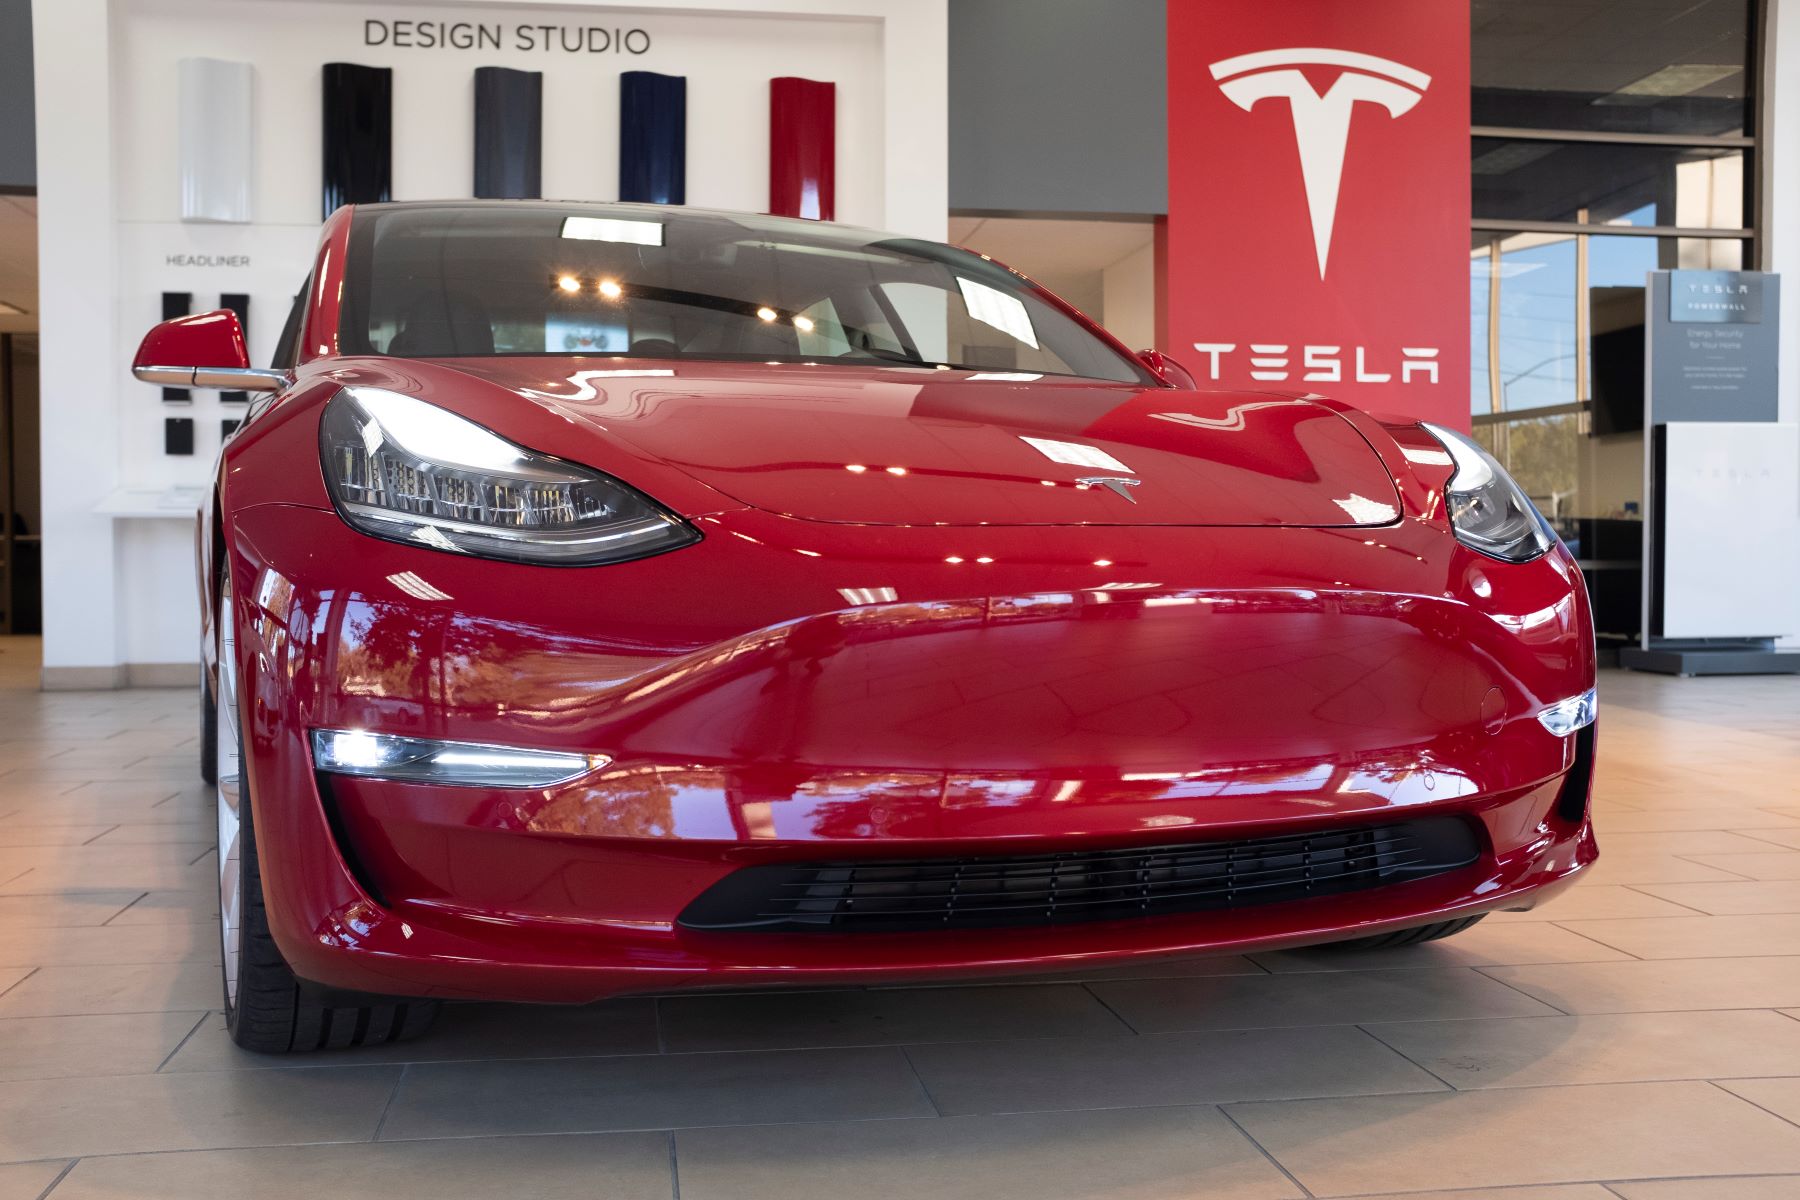 A Tesla Model S electric luxury sedan model on display at a Tesla store in Palo Alto, California